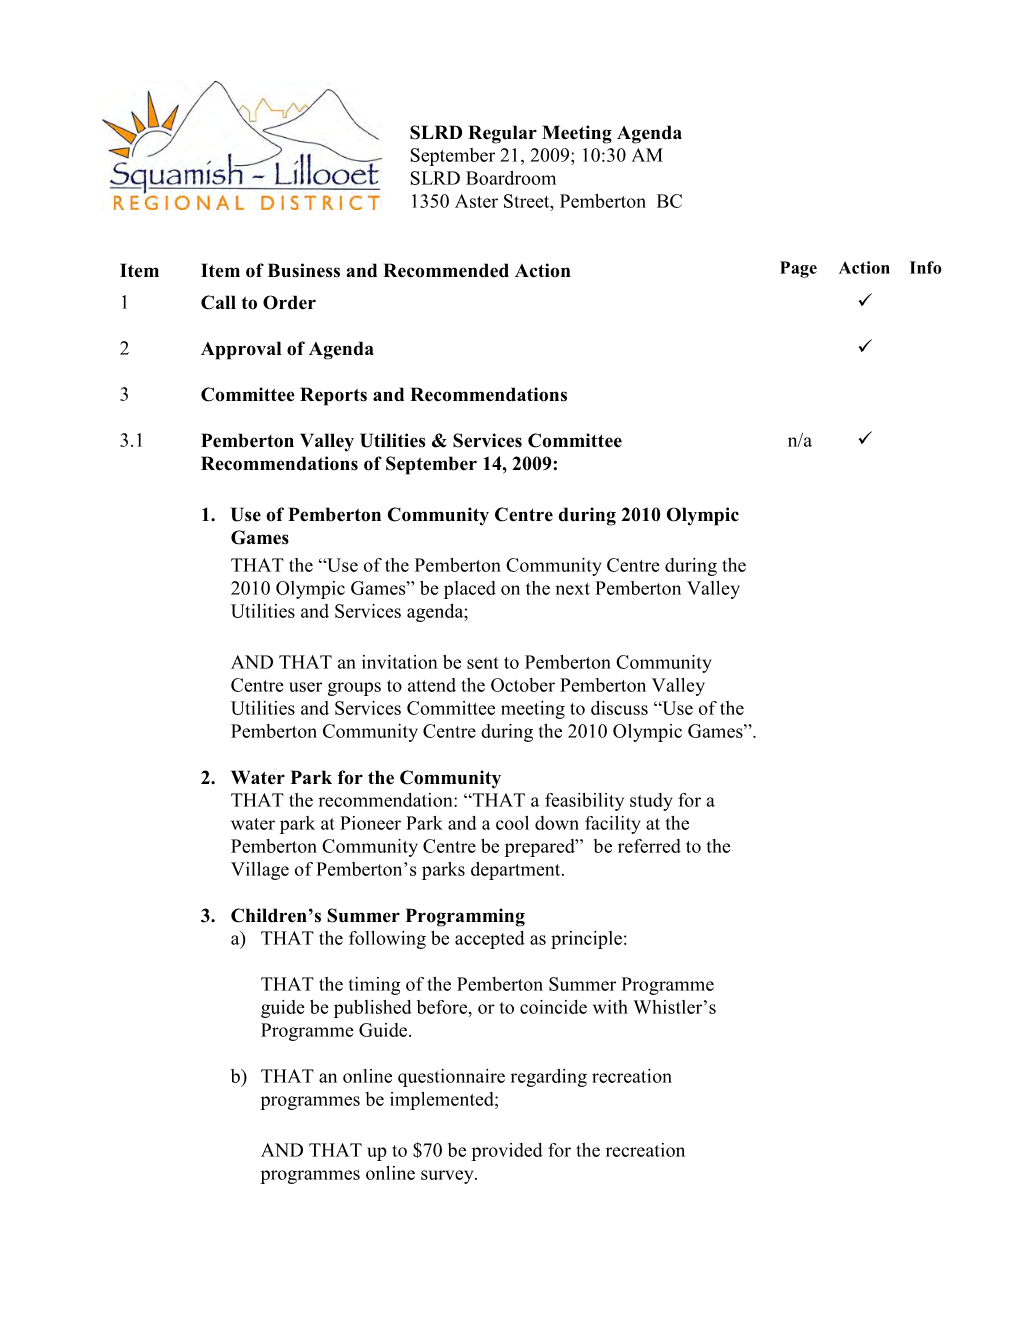 SQUAMISH-LILLOOET REGIONAL DISTRICT Development Variance Permit # 82